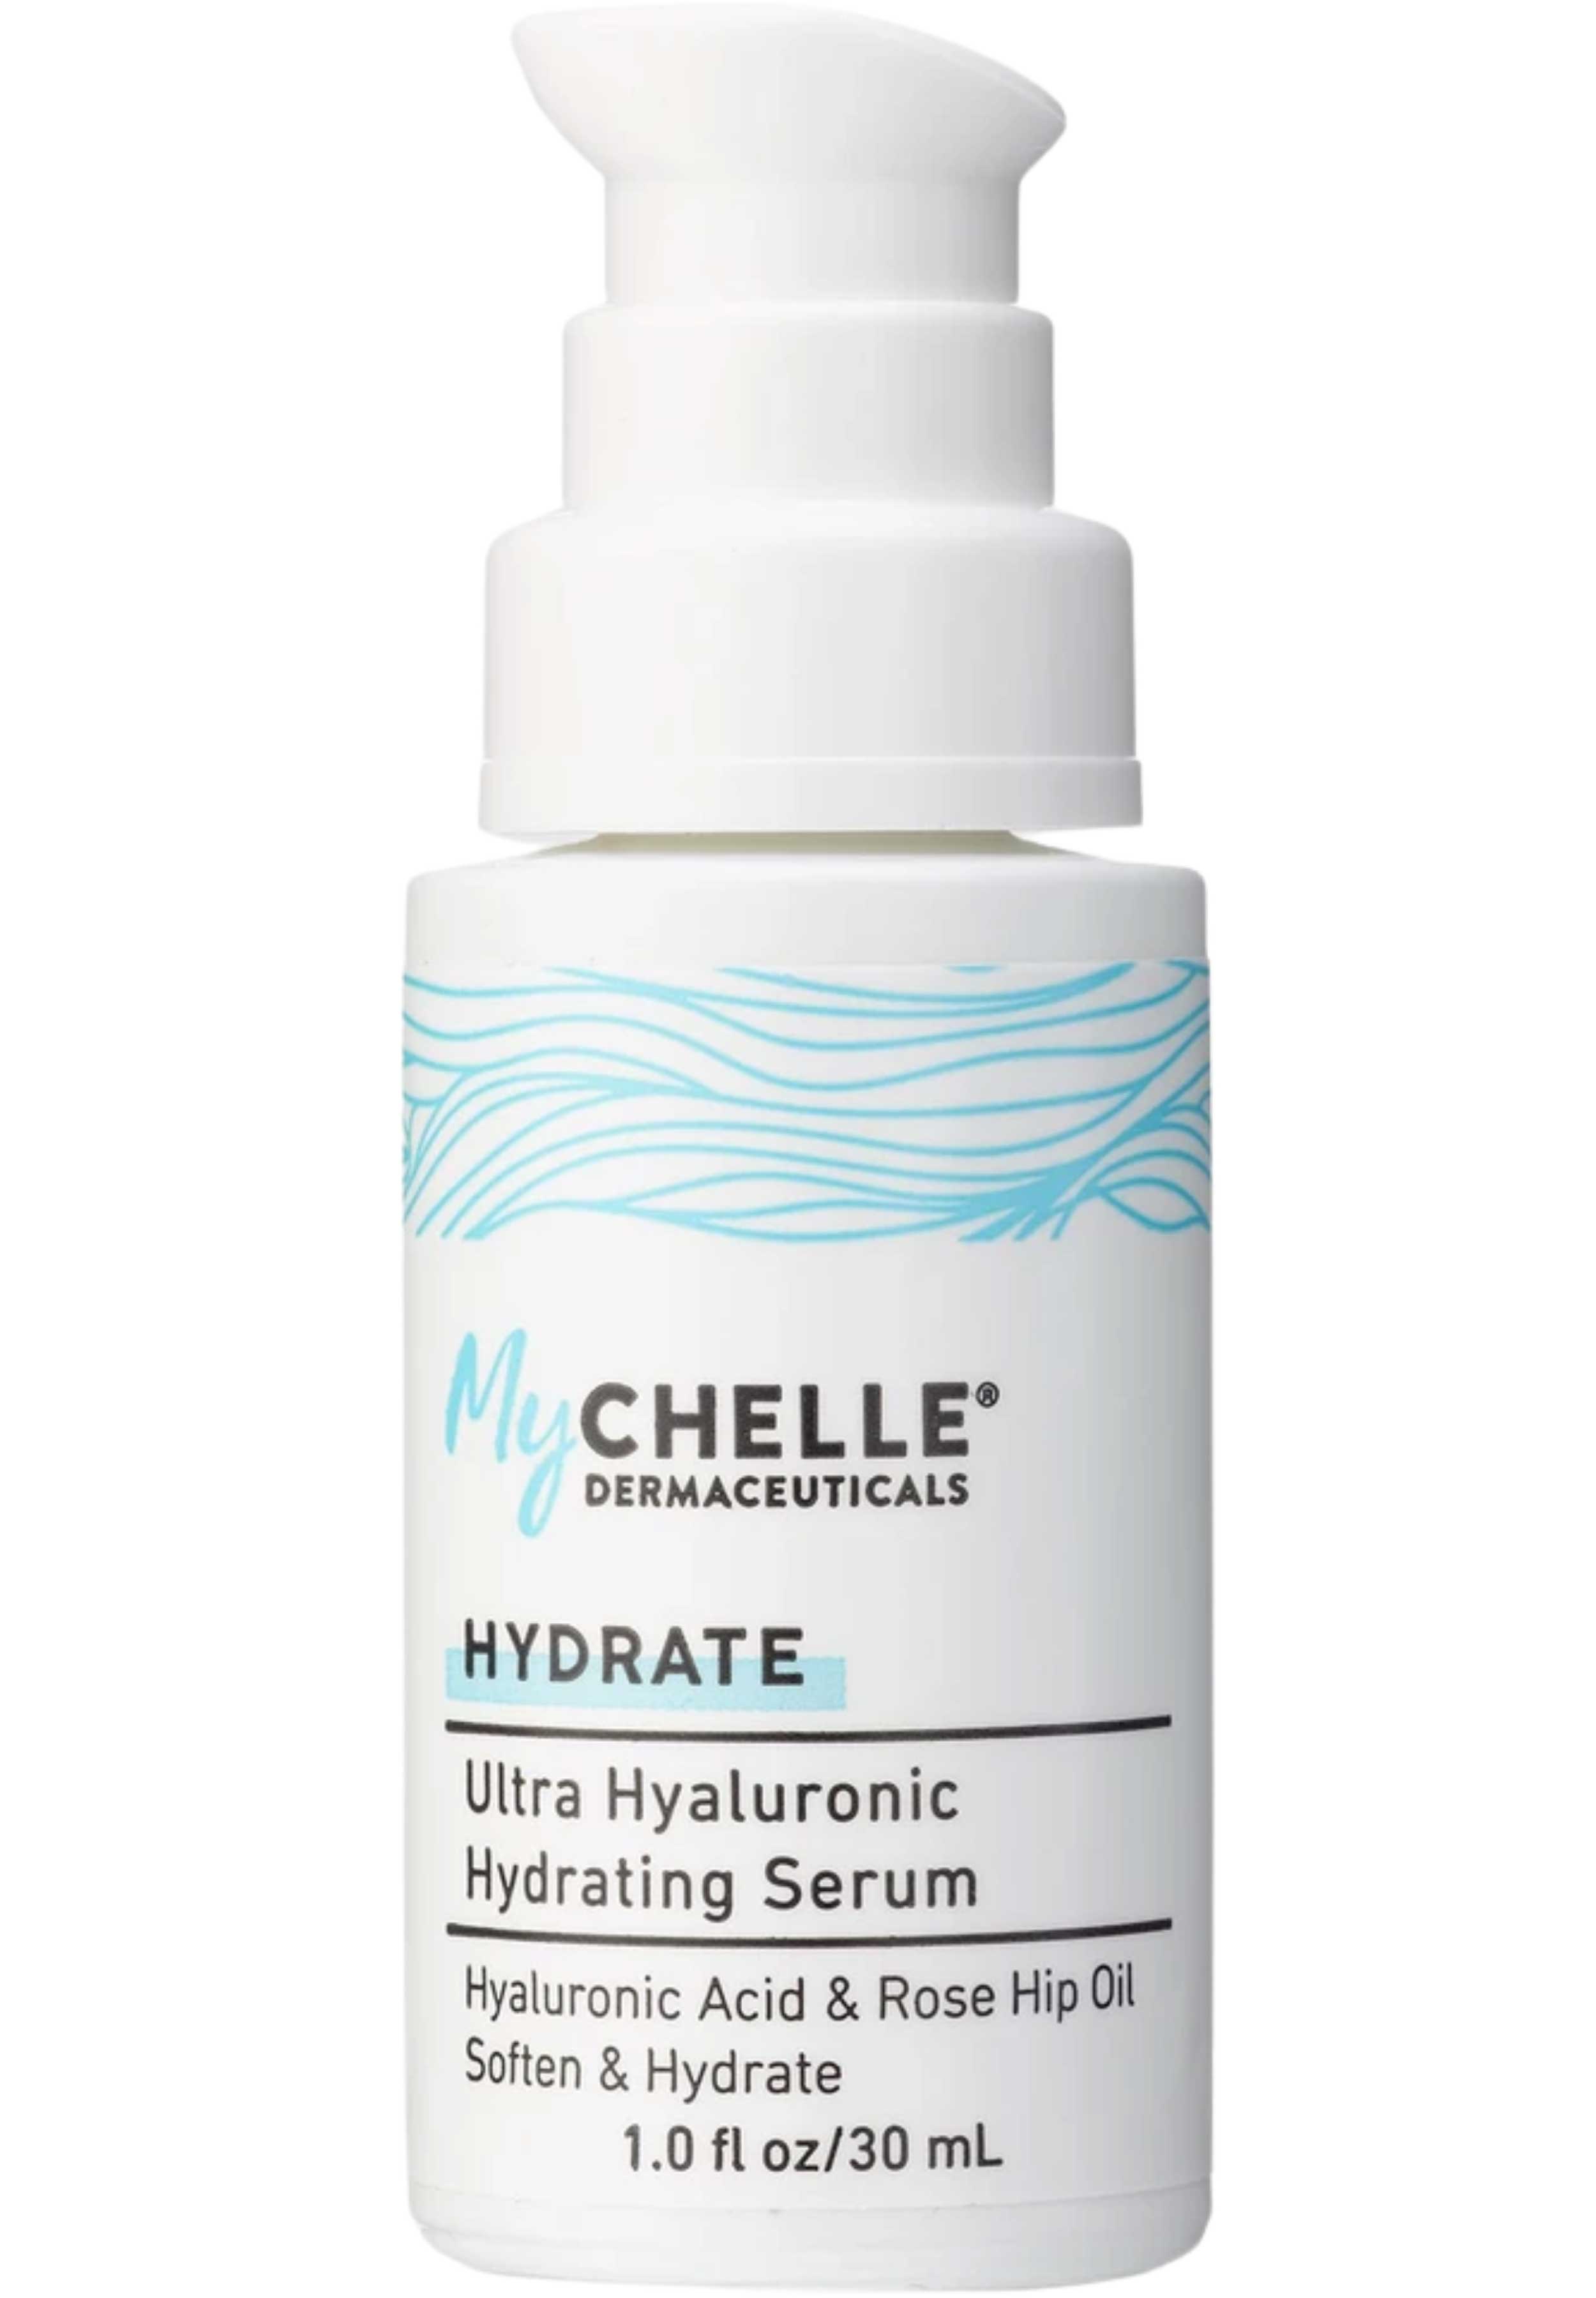 MyChelle Dermaceuticals Ultra Hyaluronic Hydrating Serum